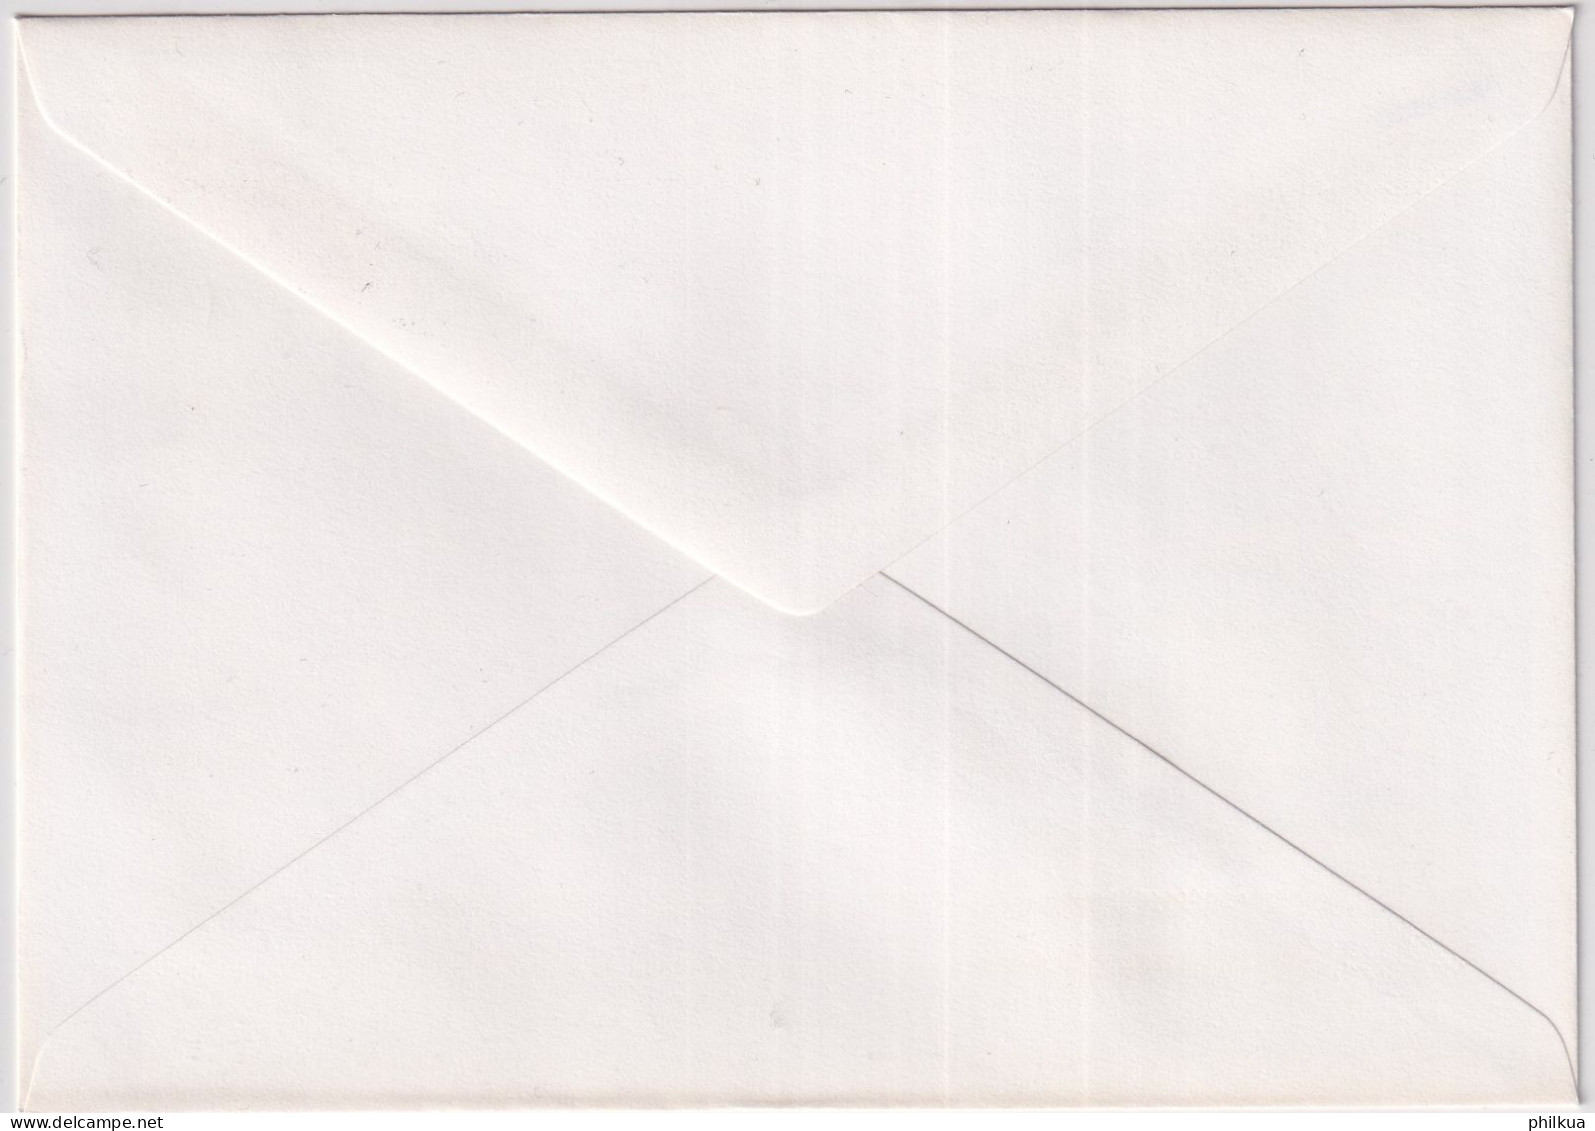 Sonderstempel TAG DER AEROPHILATELIE - VEVEY Illustrierter Beleg Mit Passender Marke - JOURNÉES DE L'AÉROPHILATÉLIE - Postmark Collection